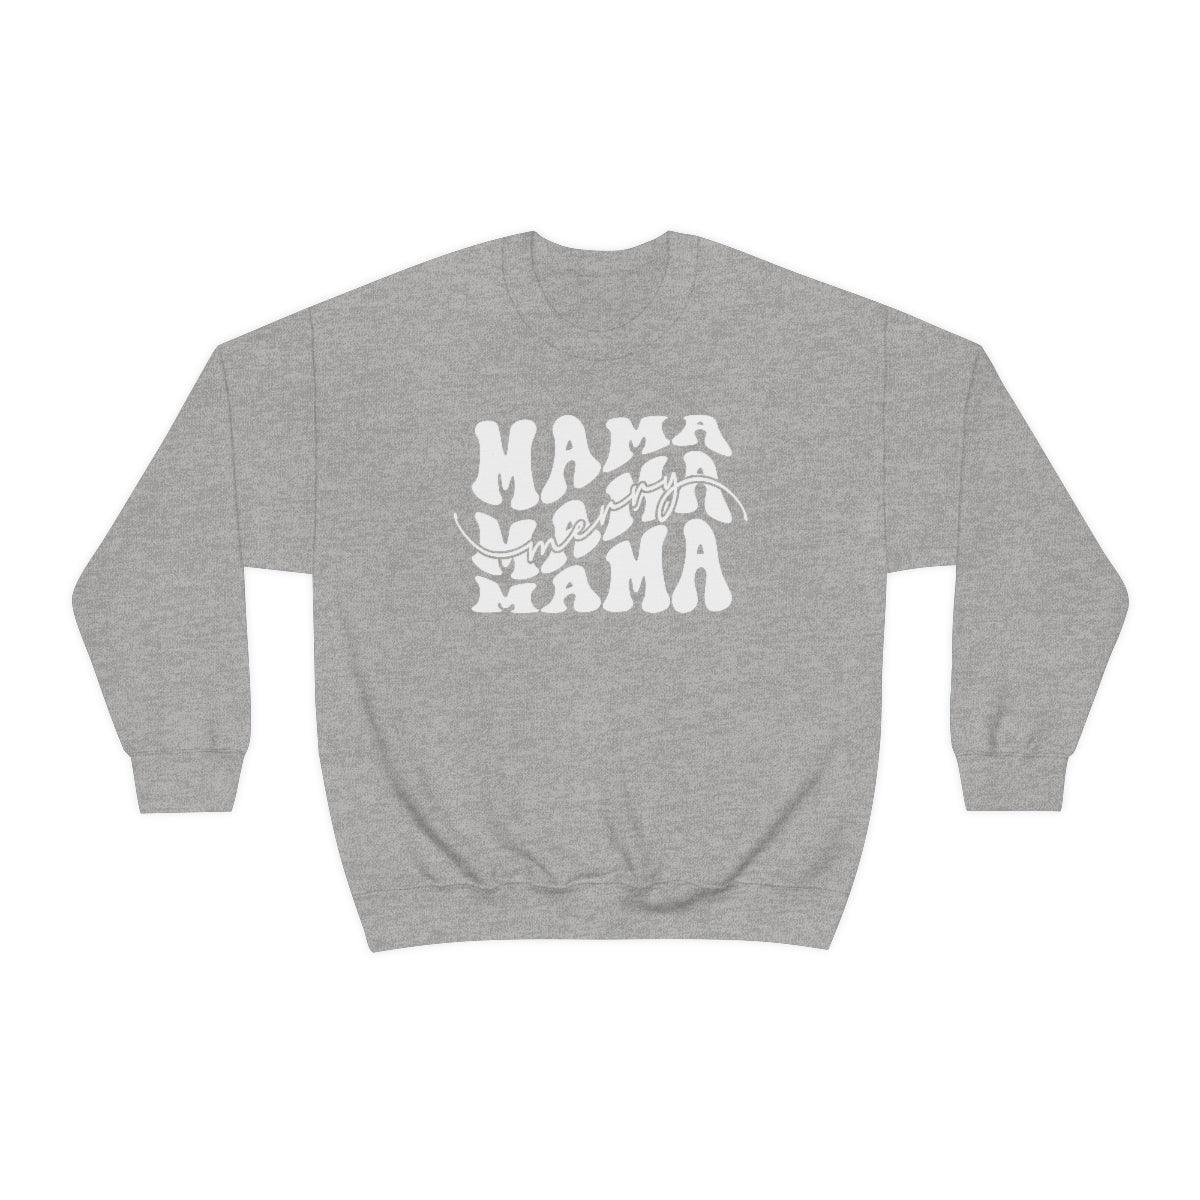 Retro Merry Mama Christmas Crewneck Sweater